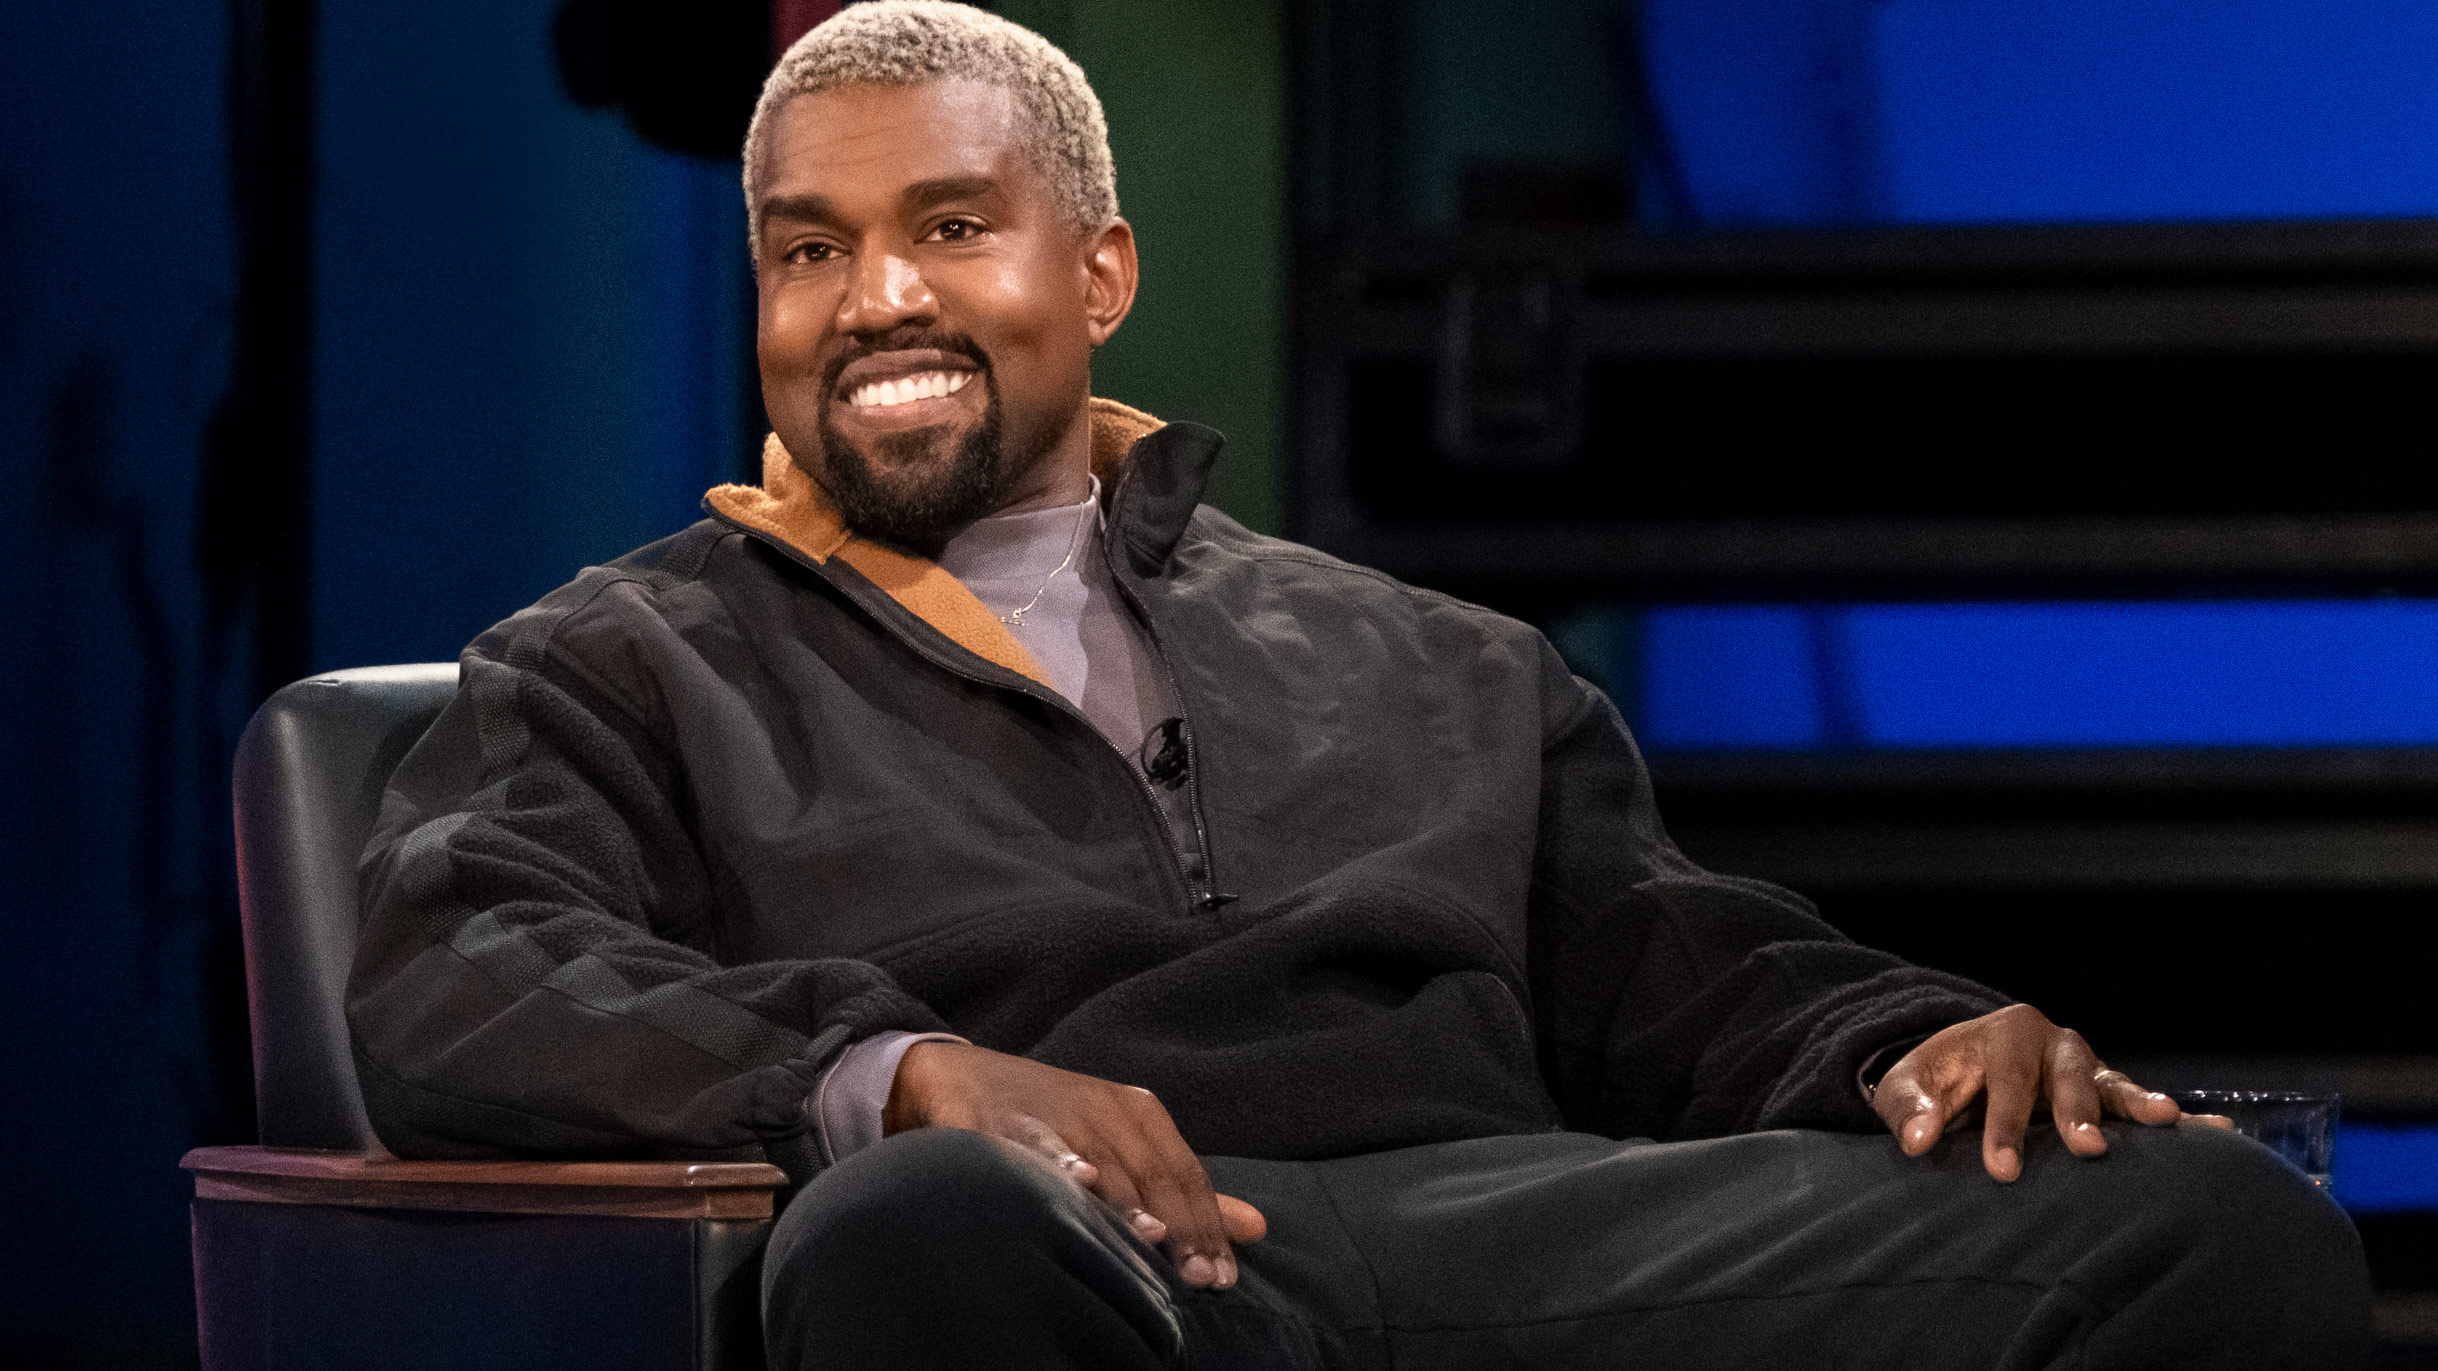 Kanye West says he may change name to Christian Genius Billionaire Kanye West | CNN